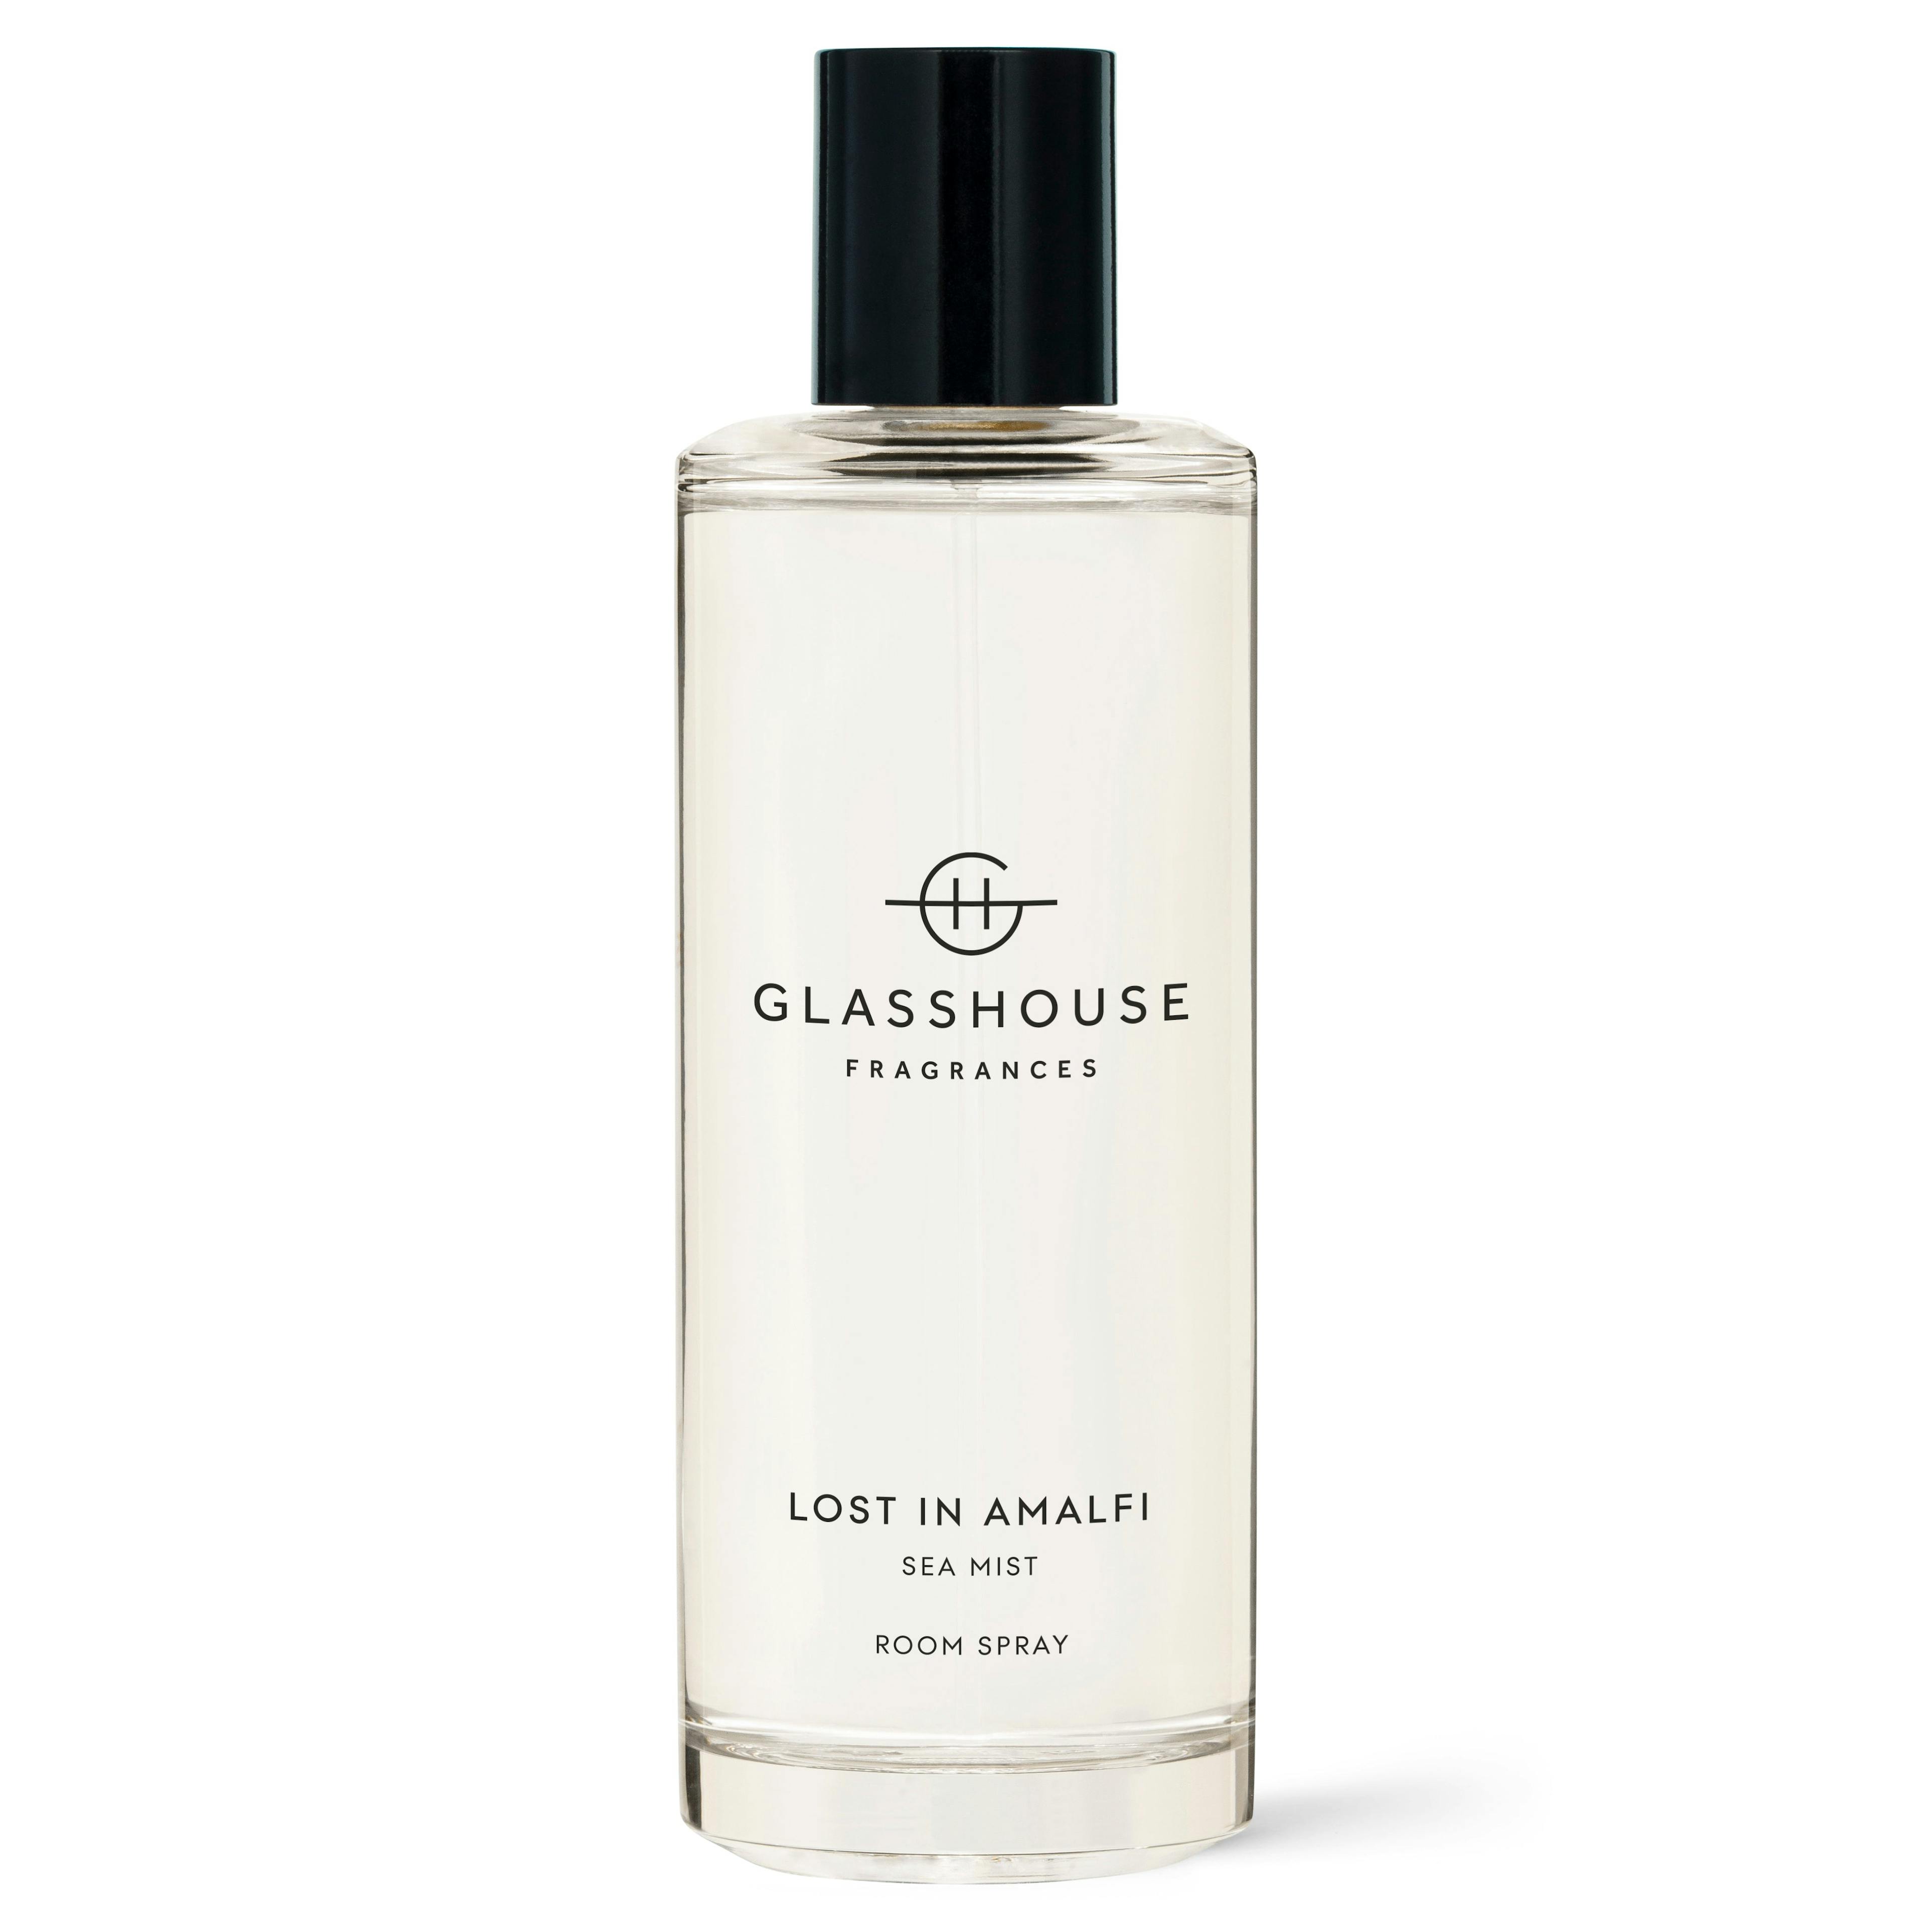 Glasshouse Fragrances Interior Fragrance 150ml - LOST IN AMALFI